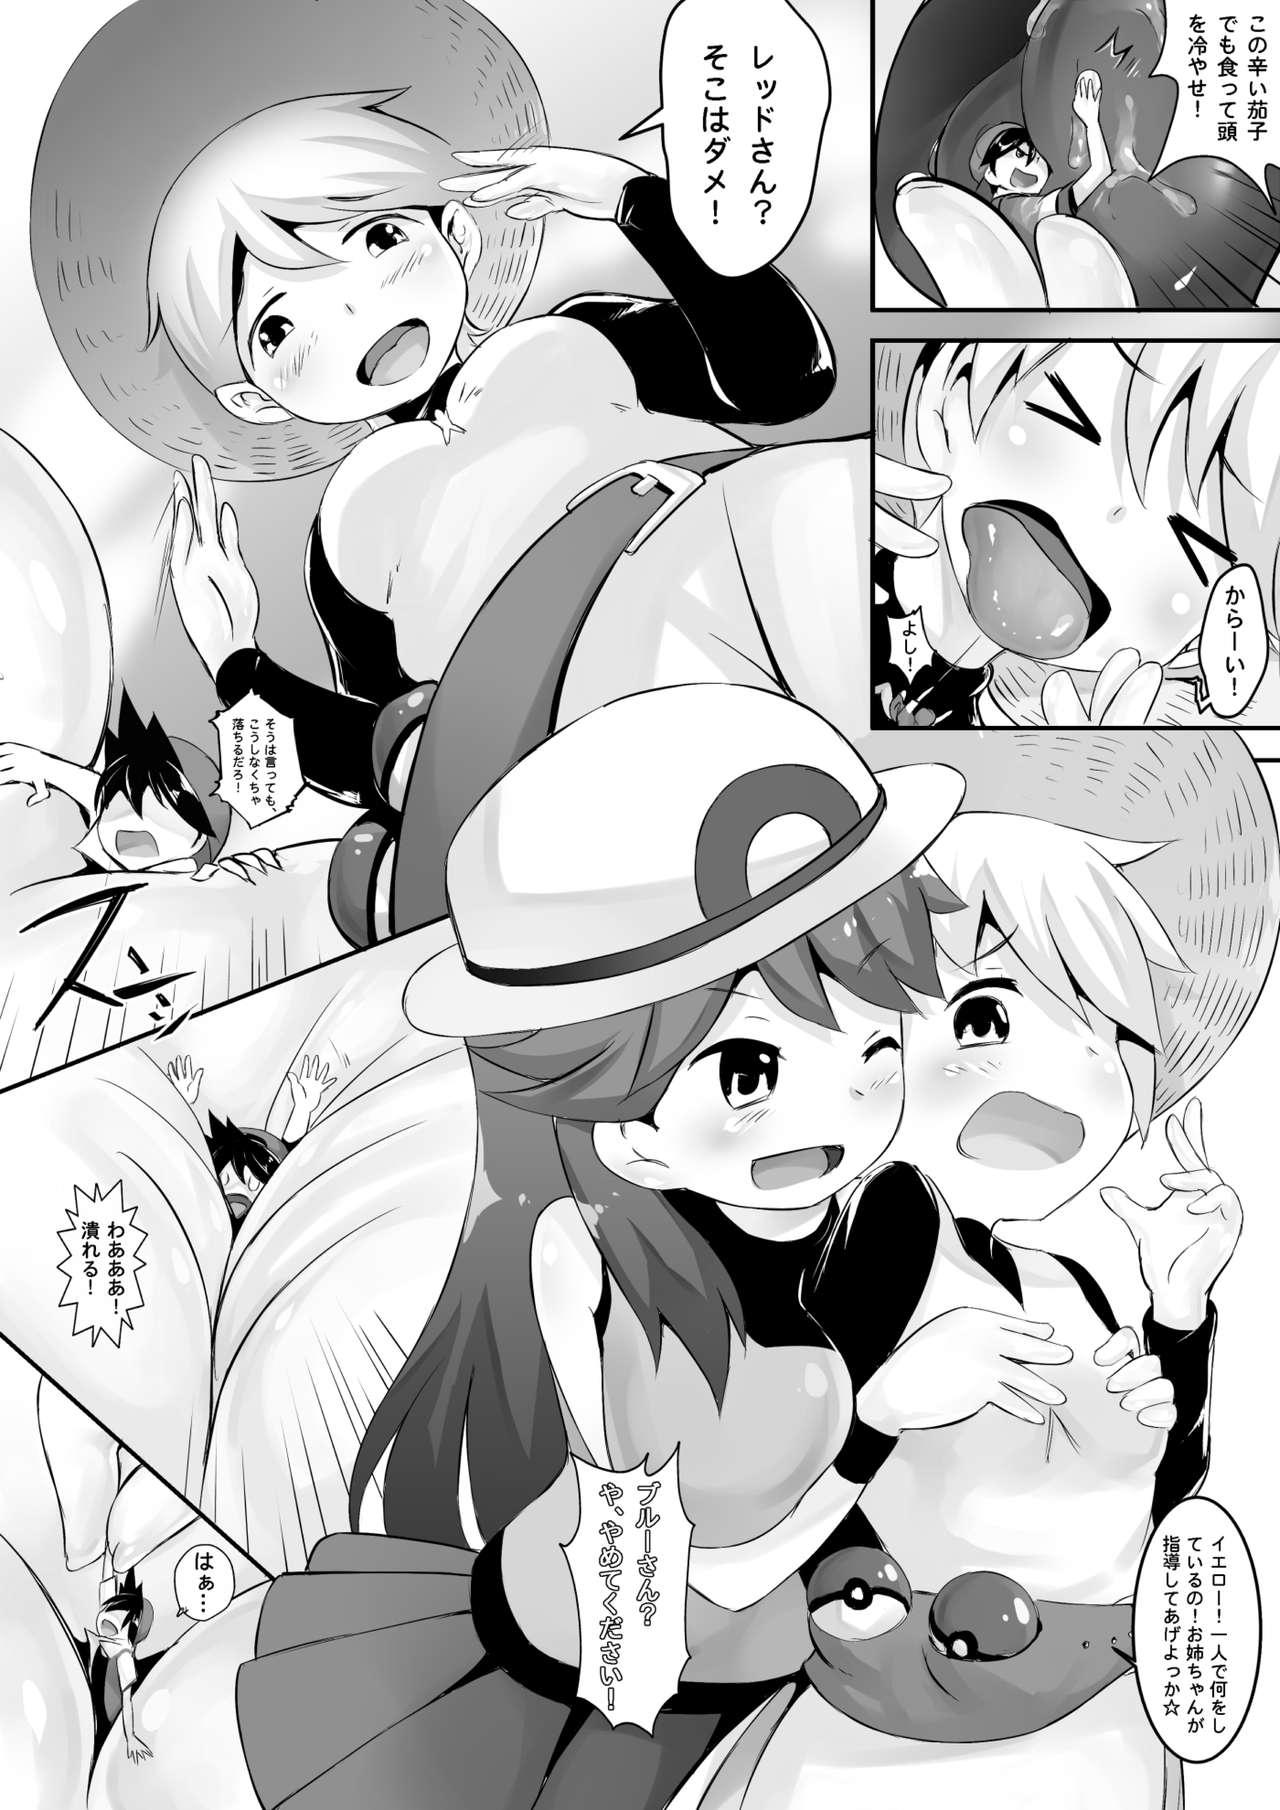 Flaca Pokemon GS Friend?! - Pokemon Gemidos - Page 8